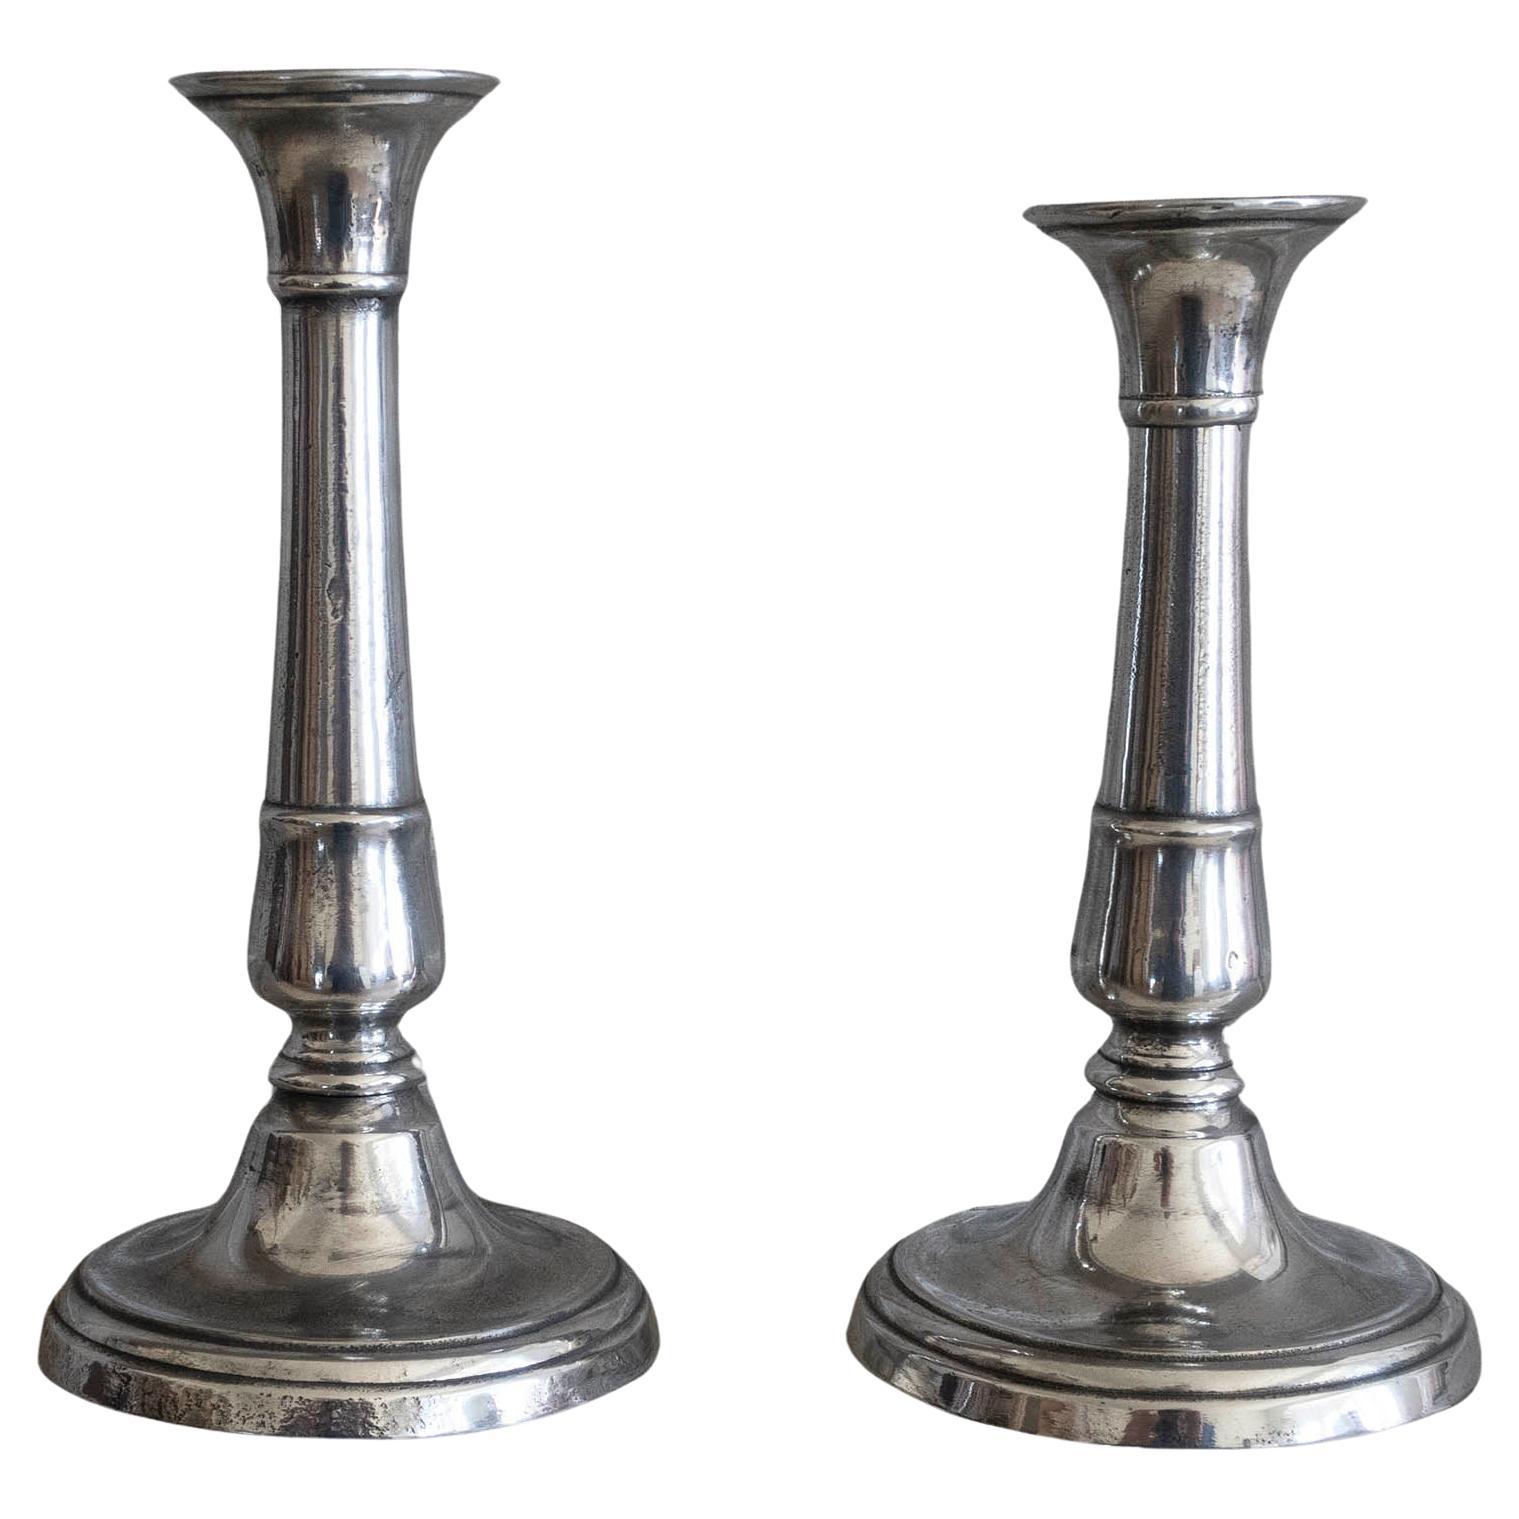 Near Pair of Gustavian Style Pewter Candlesticks, English, C.1800